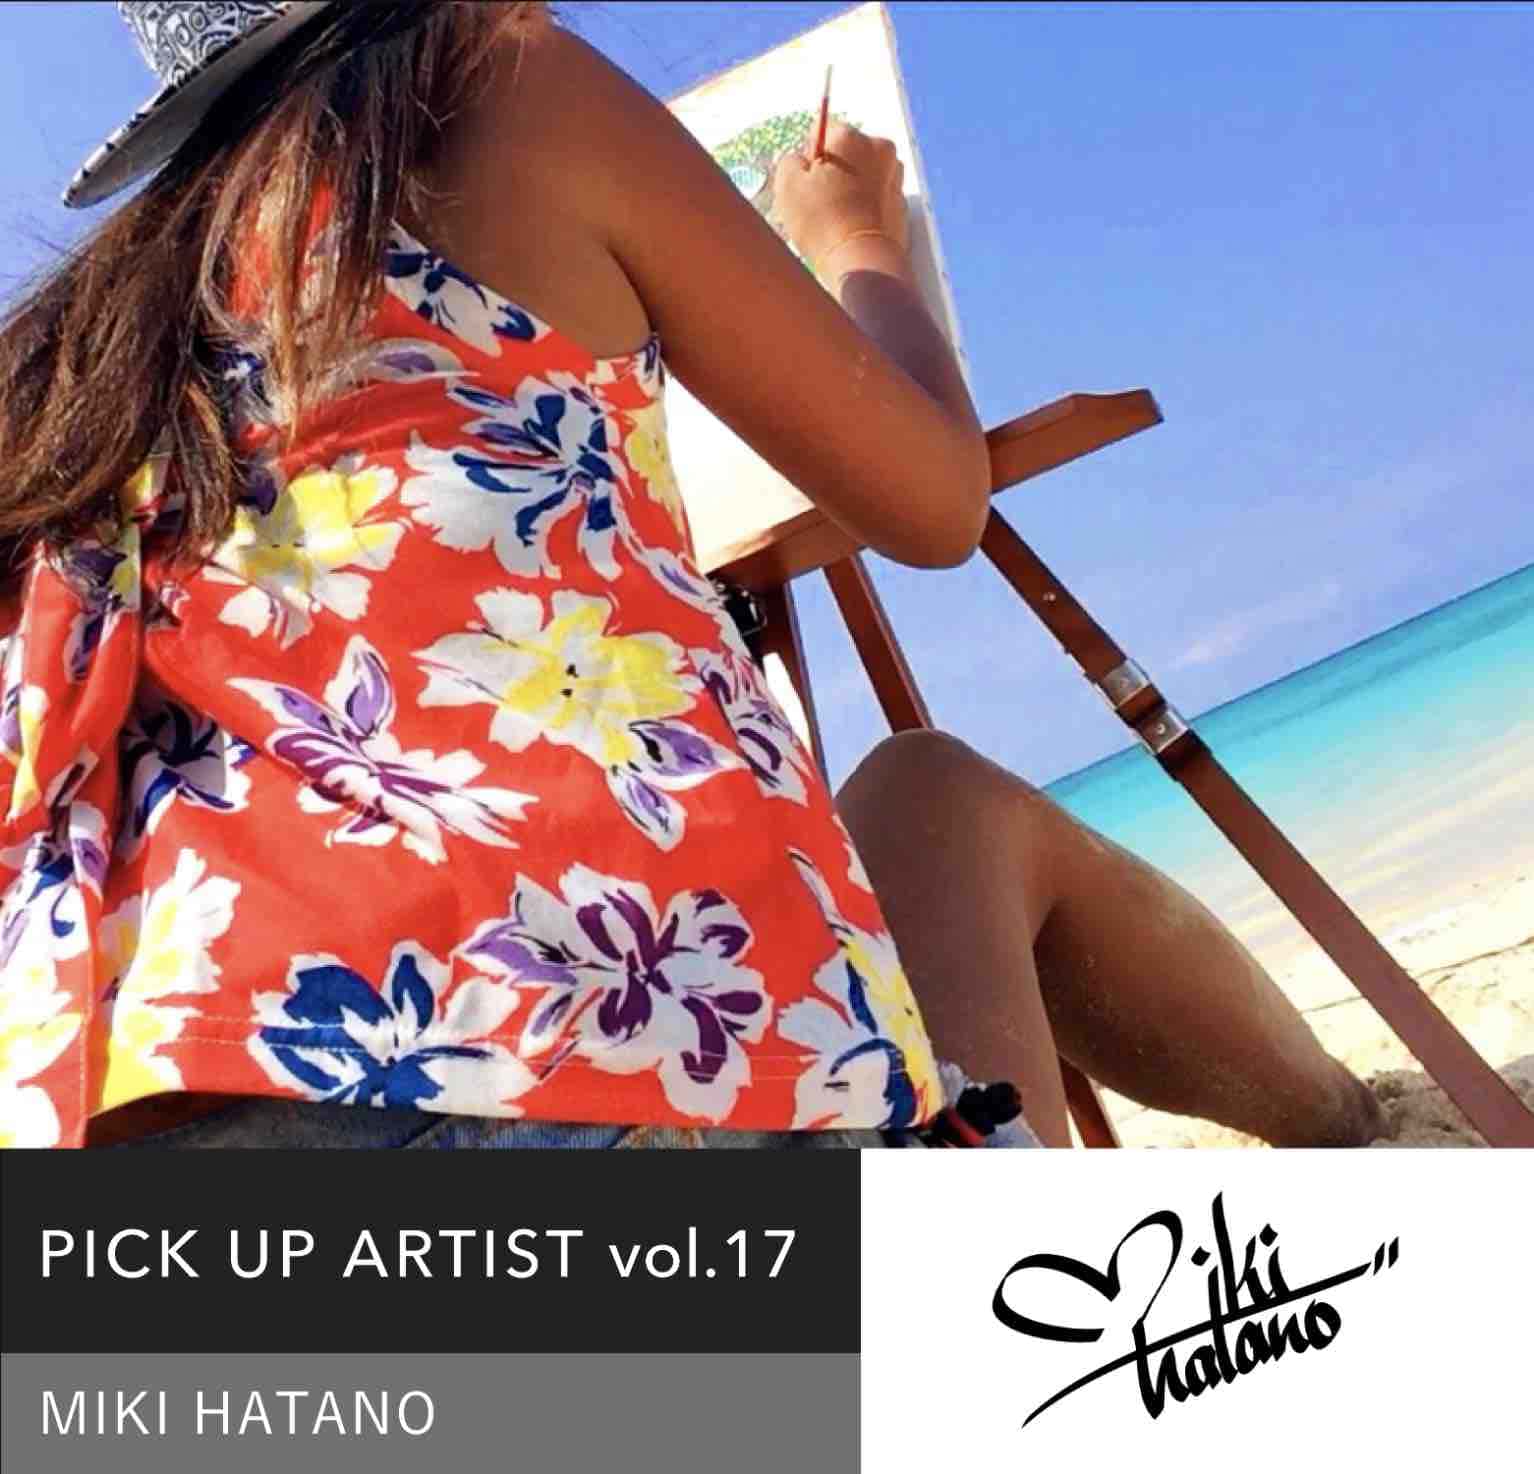 PICK UP ARTIST vol.17 MIKI HATANO